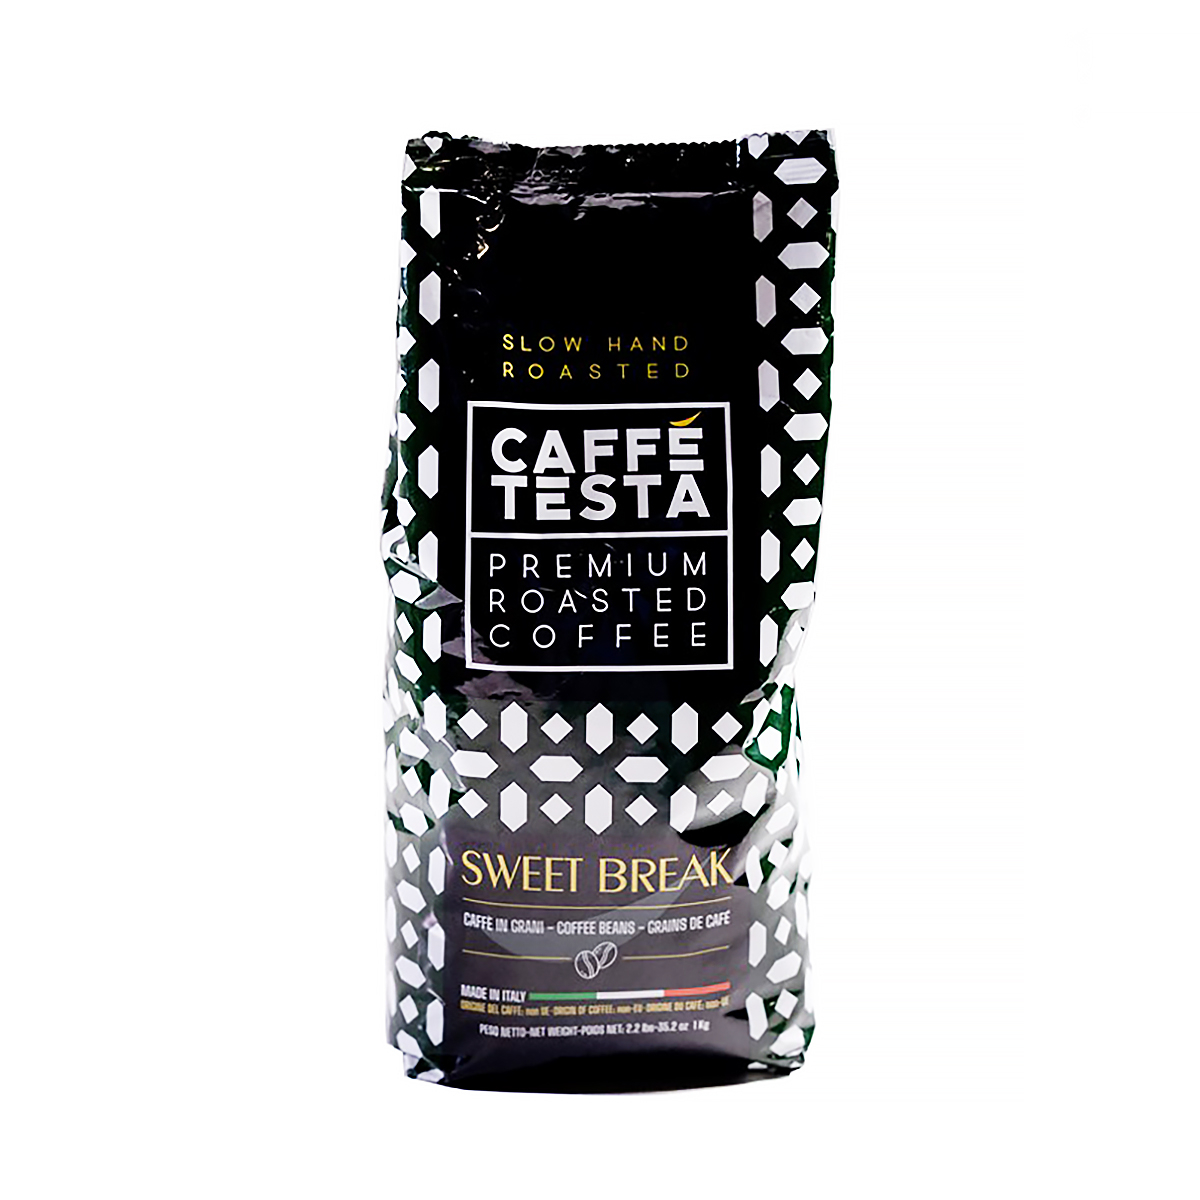 Кофе в зернах Caffe Testa Sweet Break, 1 кг кофе в зернах caffe testa hard touch 1 кг